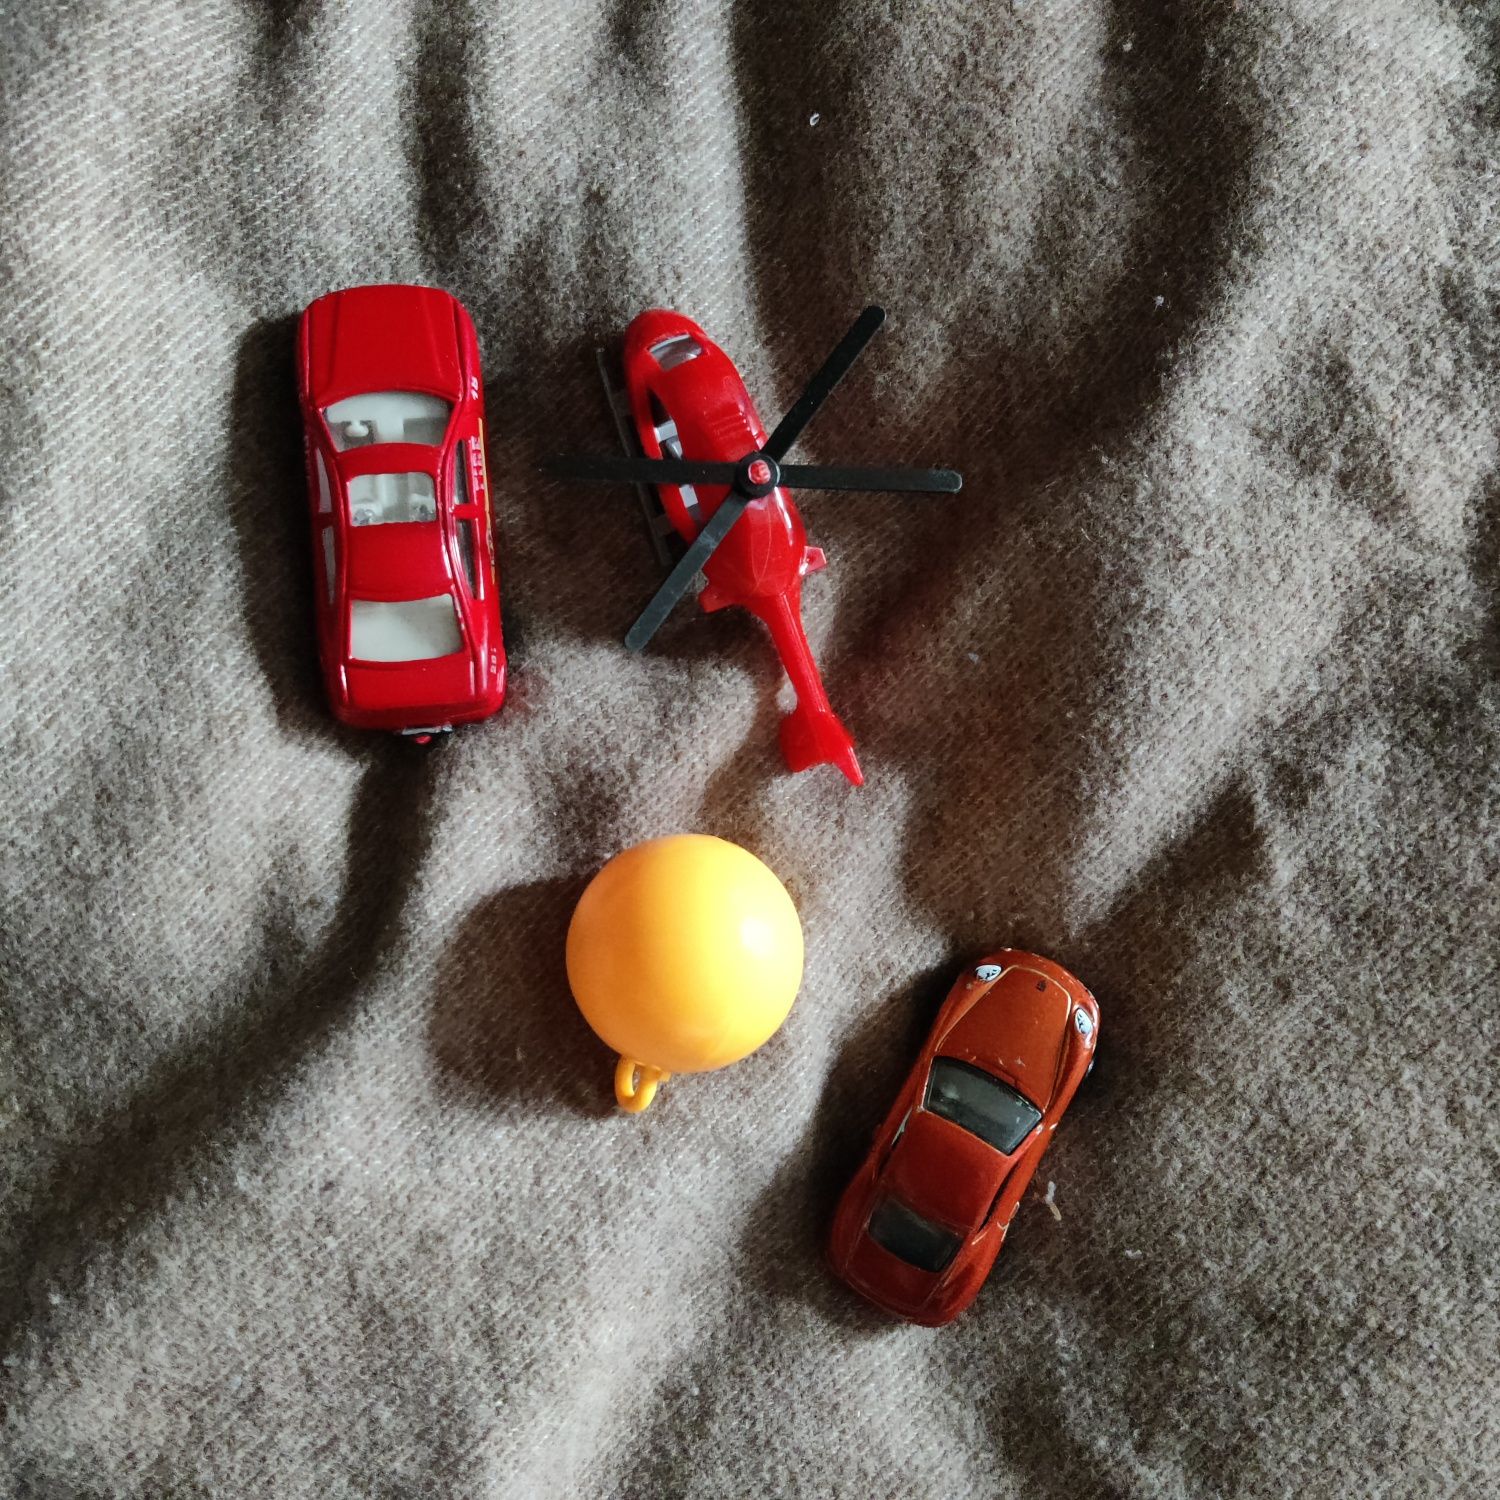 Трек, траса, парковка дитяча іграшка для хлопчика